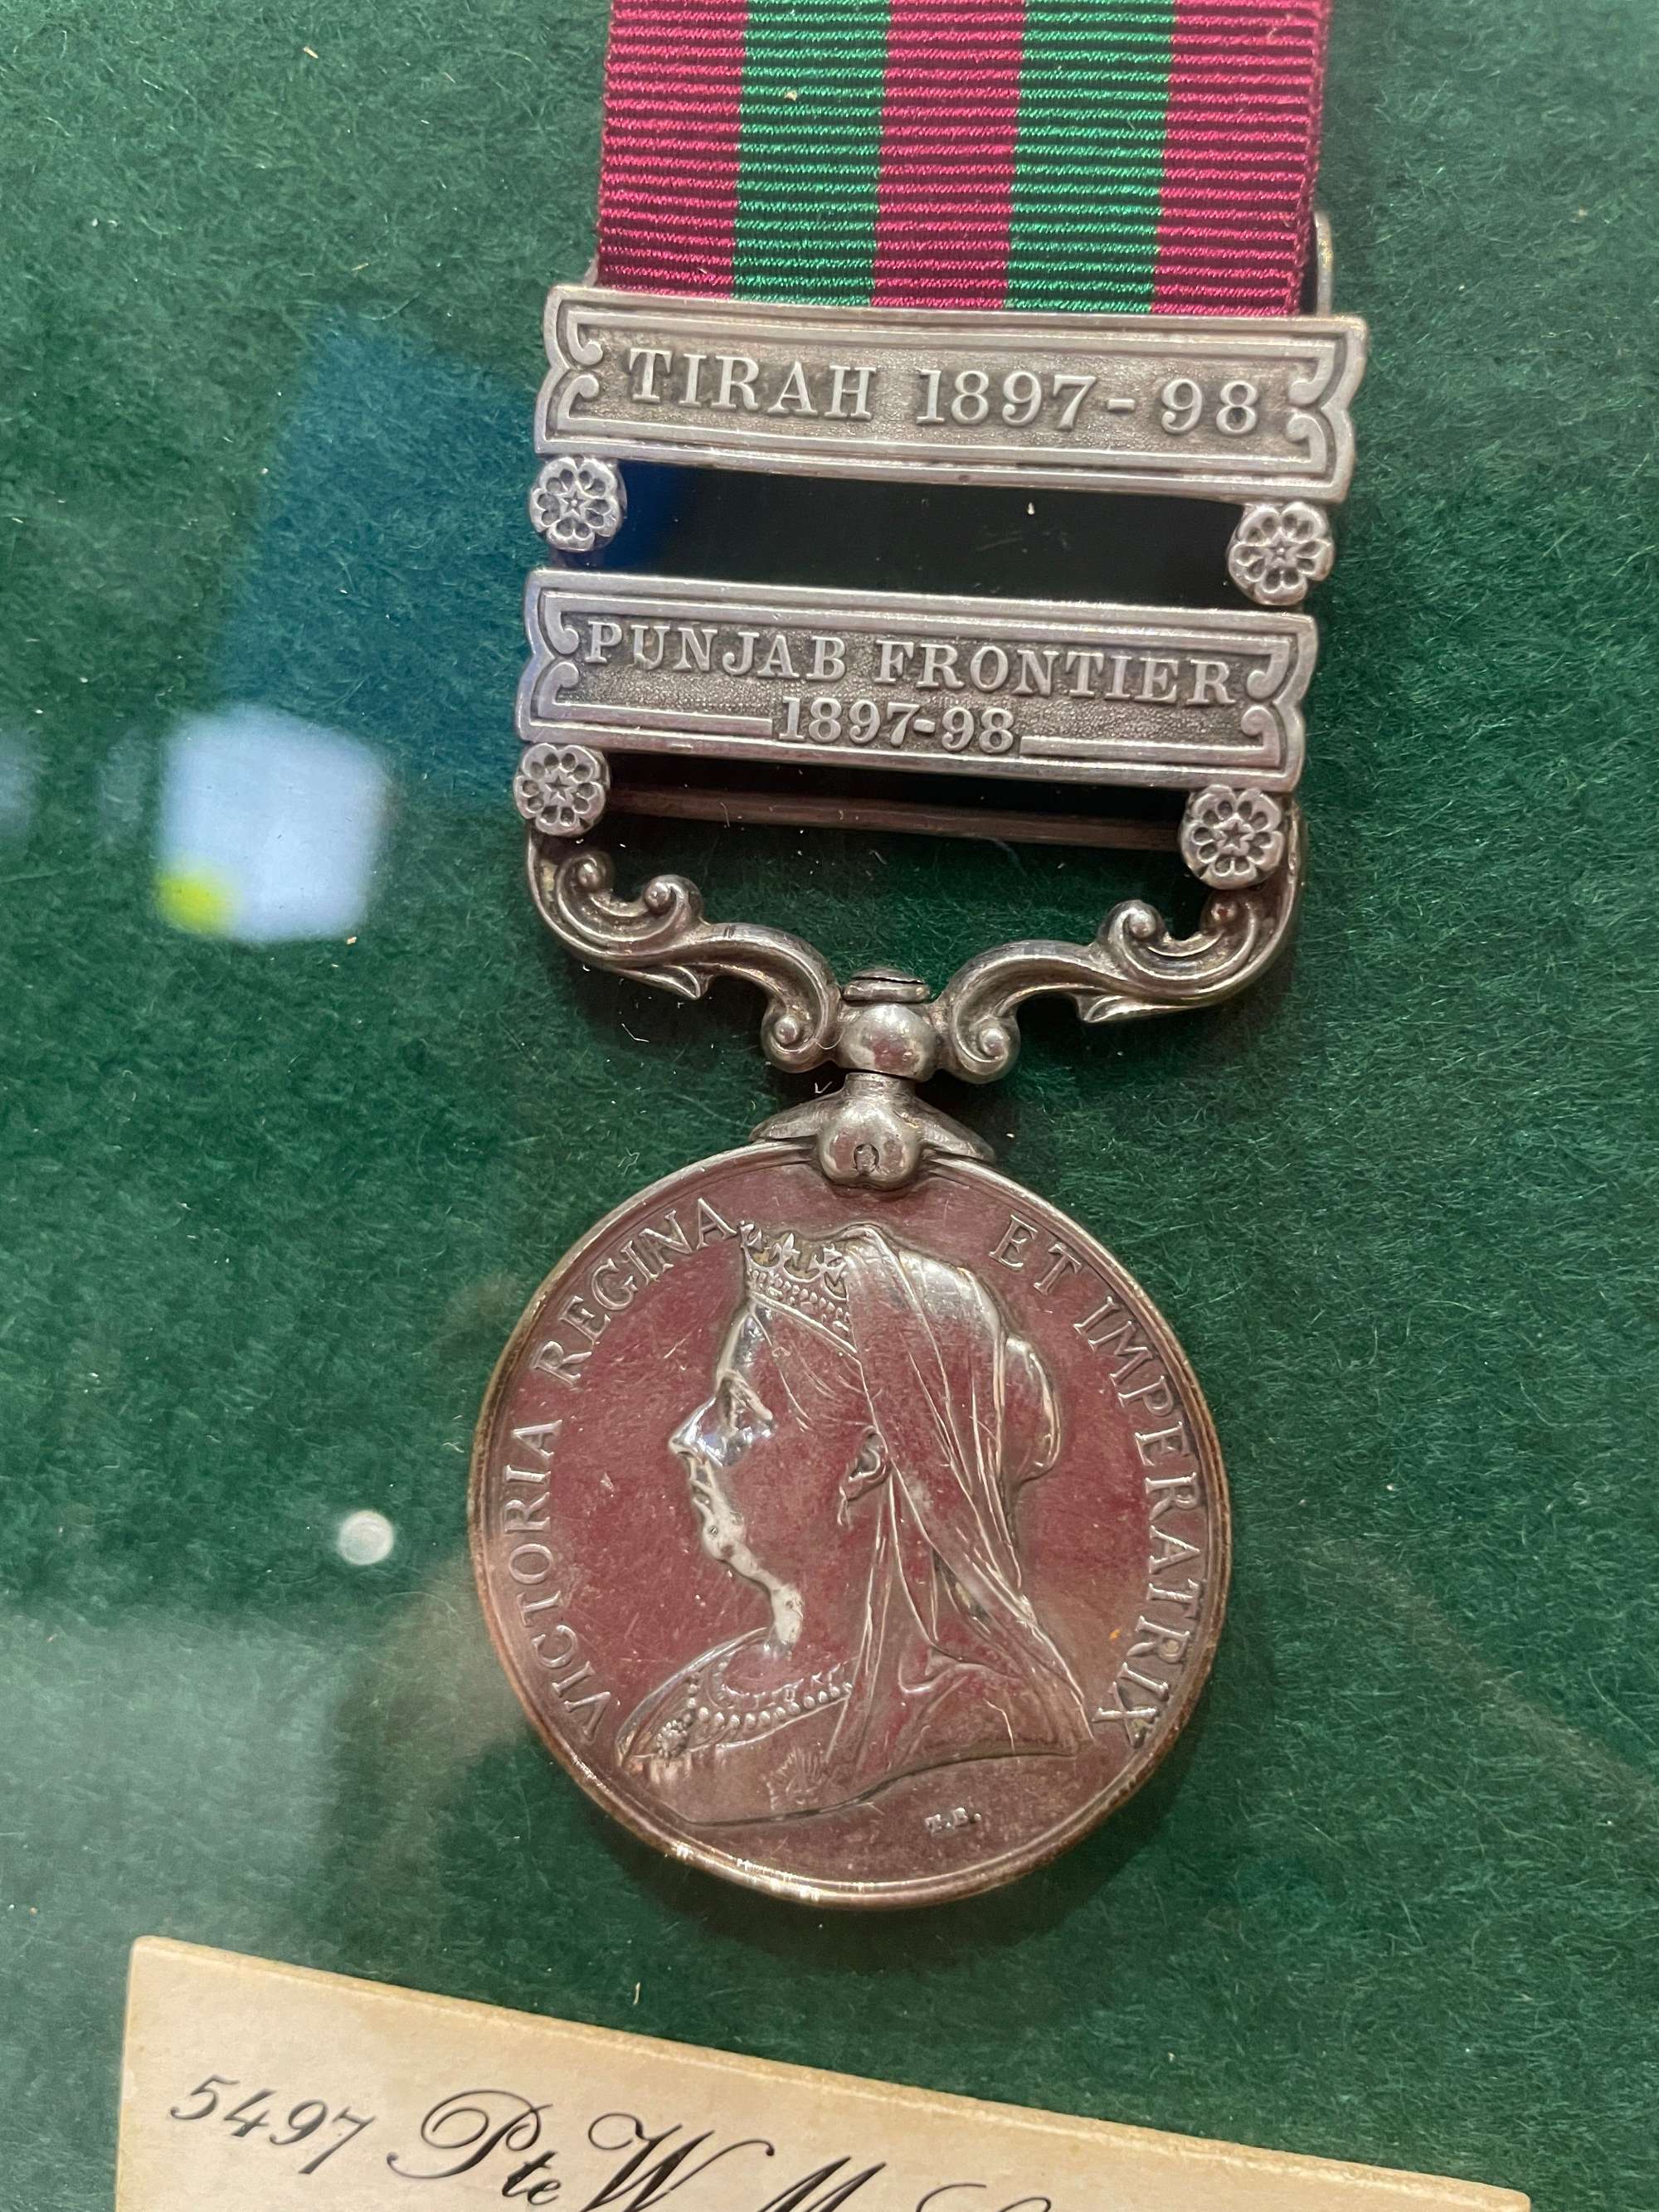 Original 1895 India General Service Medal, Two Clasps (Tirah 1897-98 and Pubjab F. 1897-98